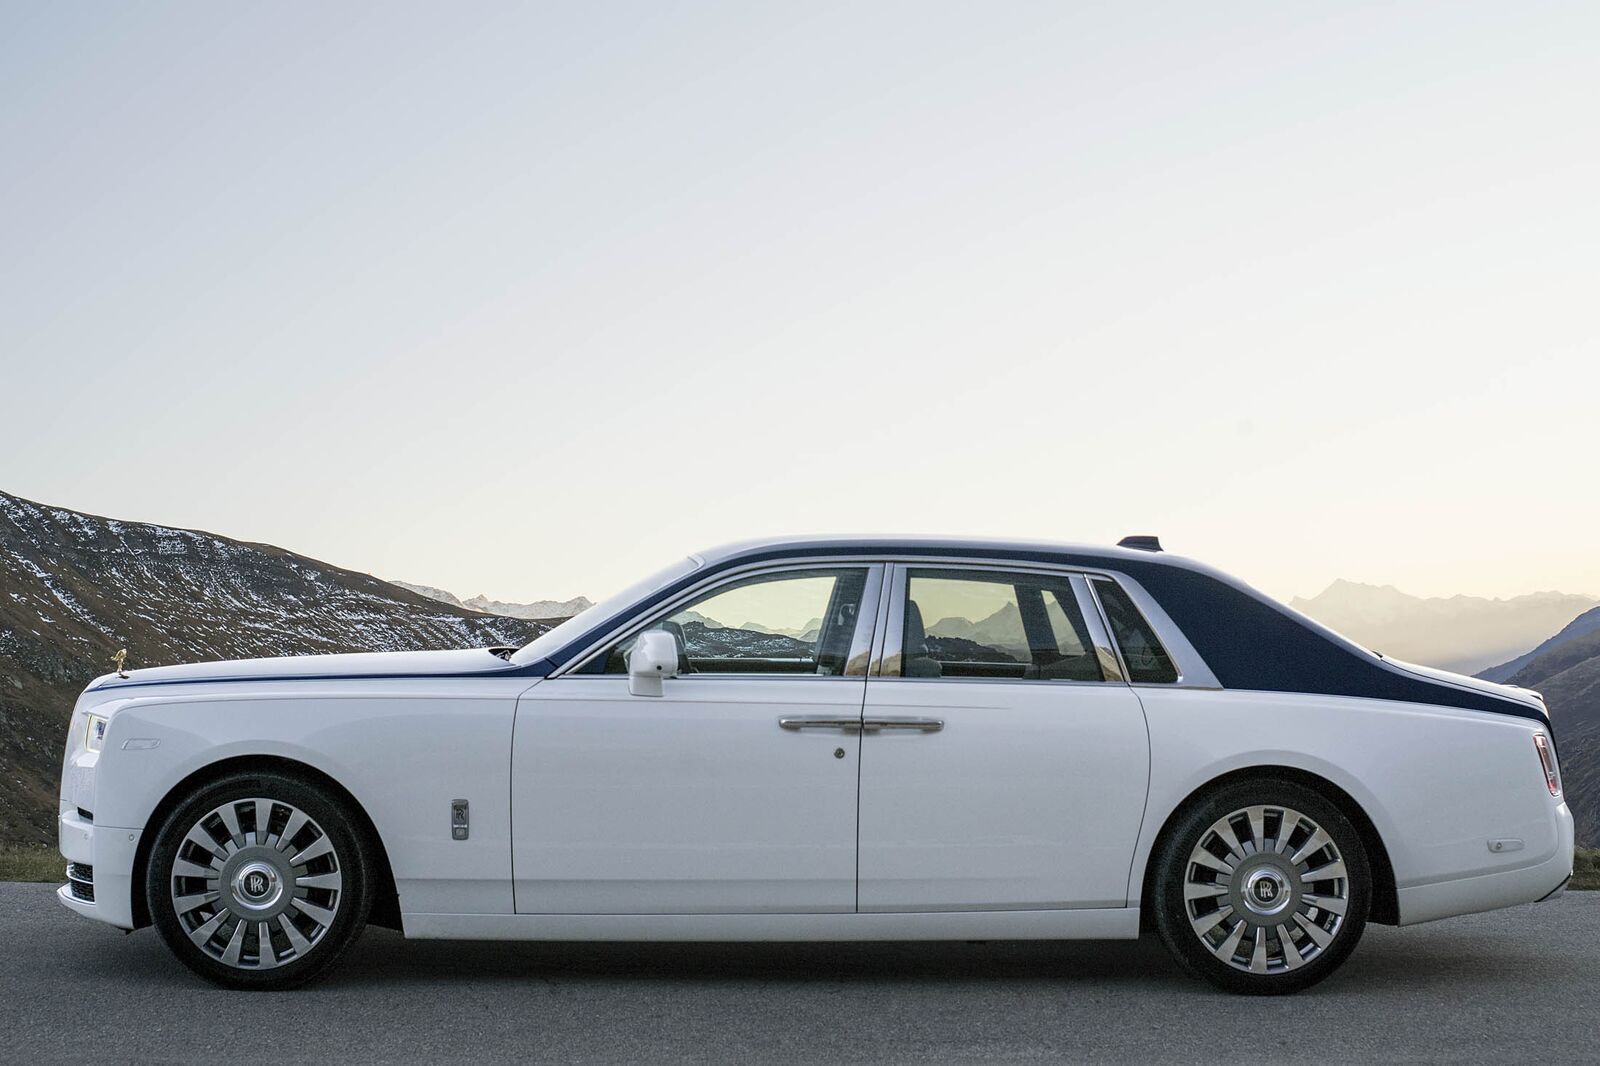 Large Sedan: Rolls-Royce Phantom 